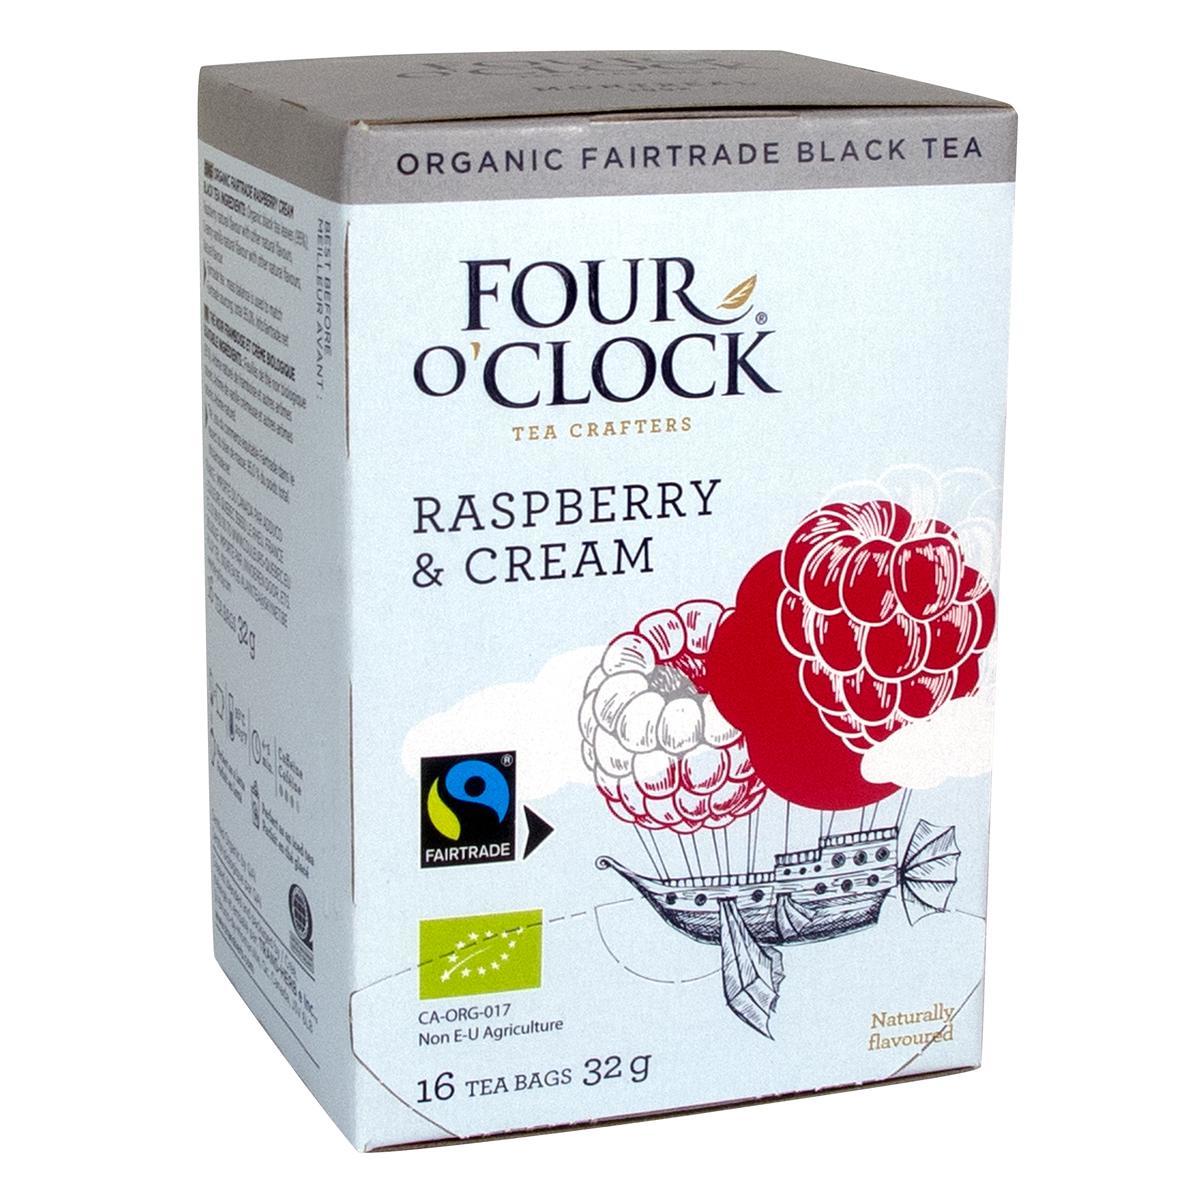 Four O’Clock's Four O'Clock HIMBEERE & CREME'